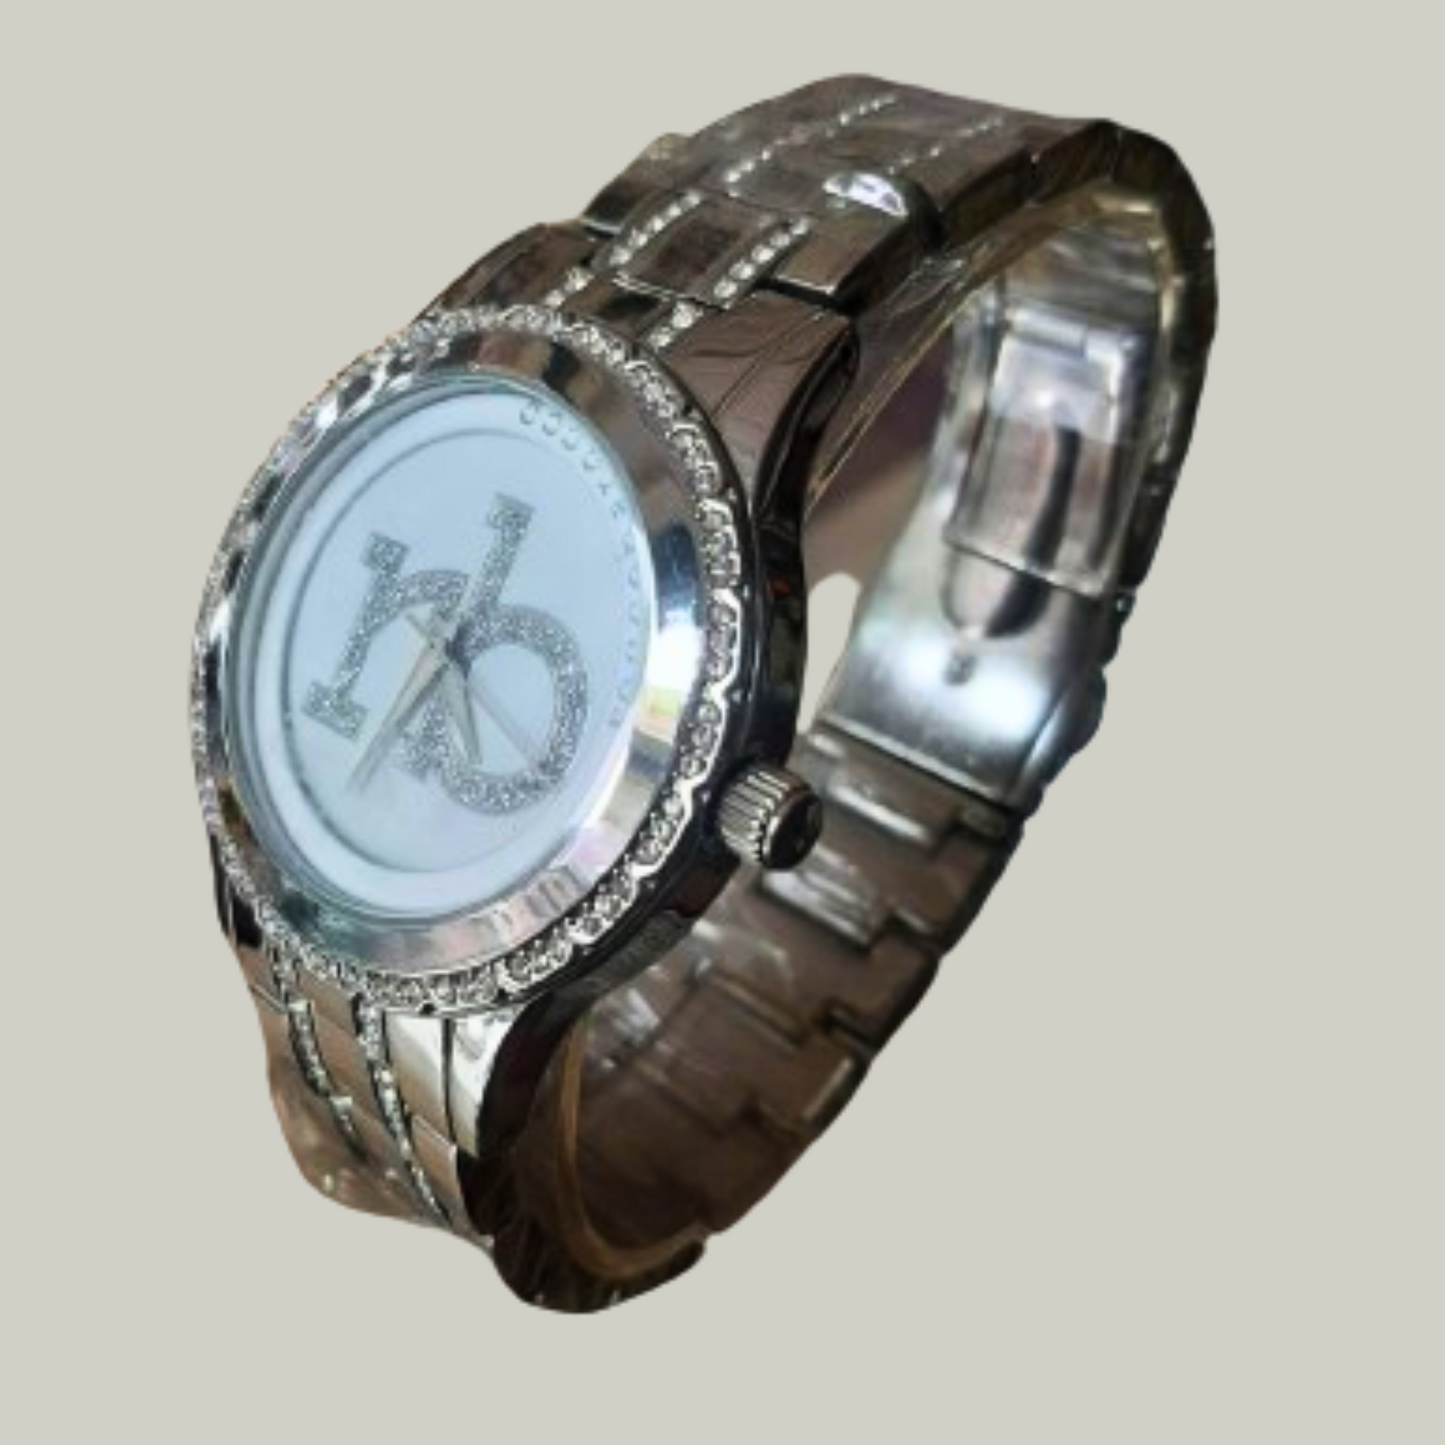 Silver Roccobarocco RB0020 Women's Quartz Watch